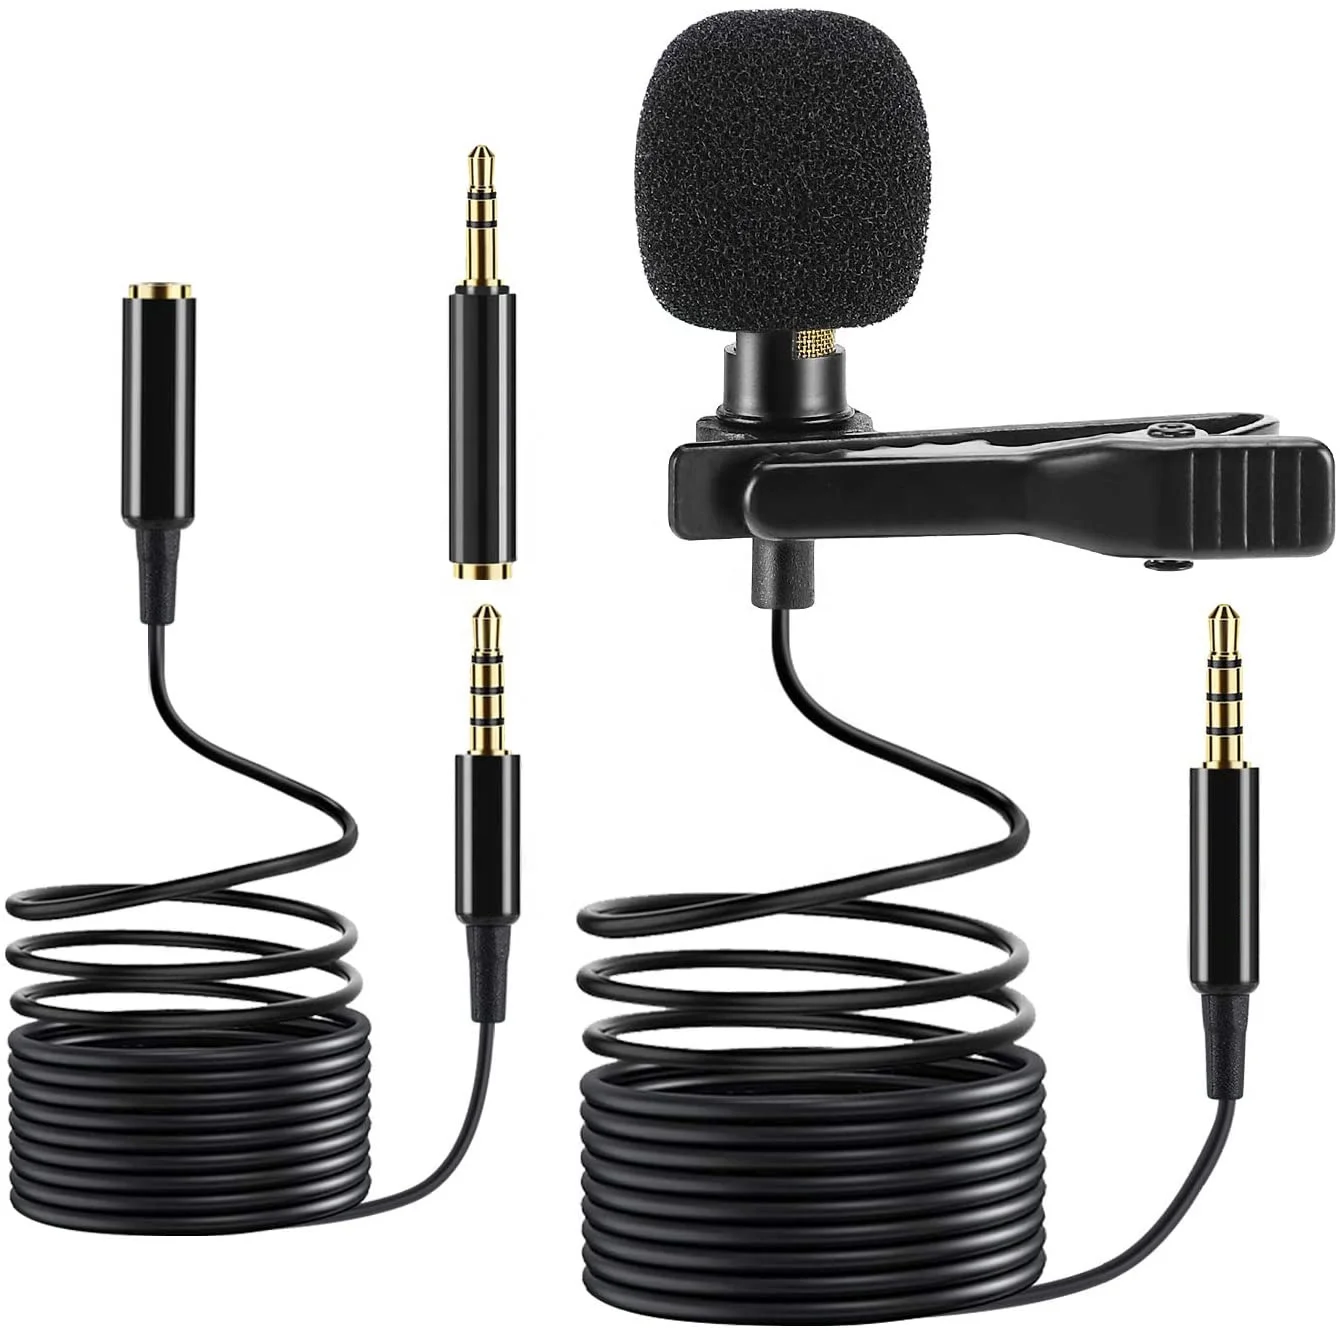 

WIK-JM 3.5m 2+1.5m Mini Portable Microphone Condenser Clip-on Lapel Lavalier Mic Wired Mikrofo, Black